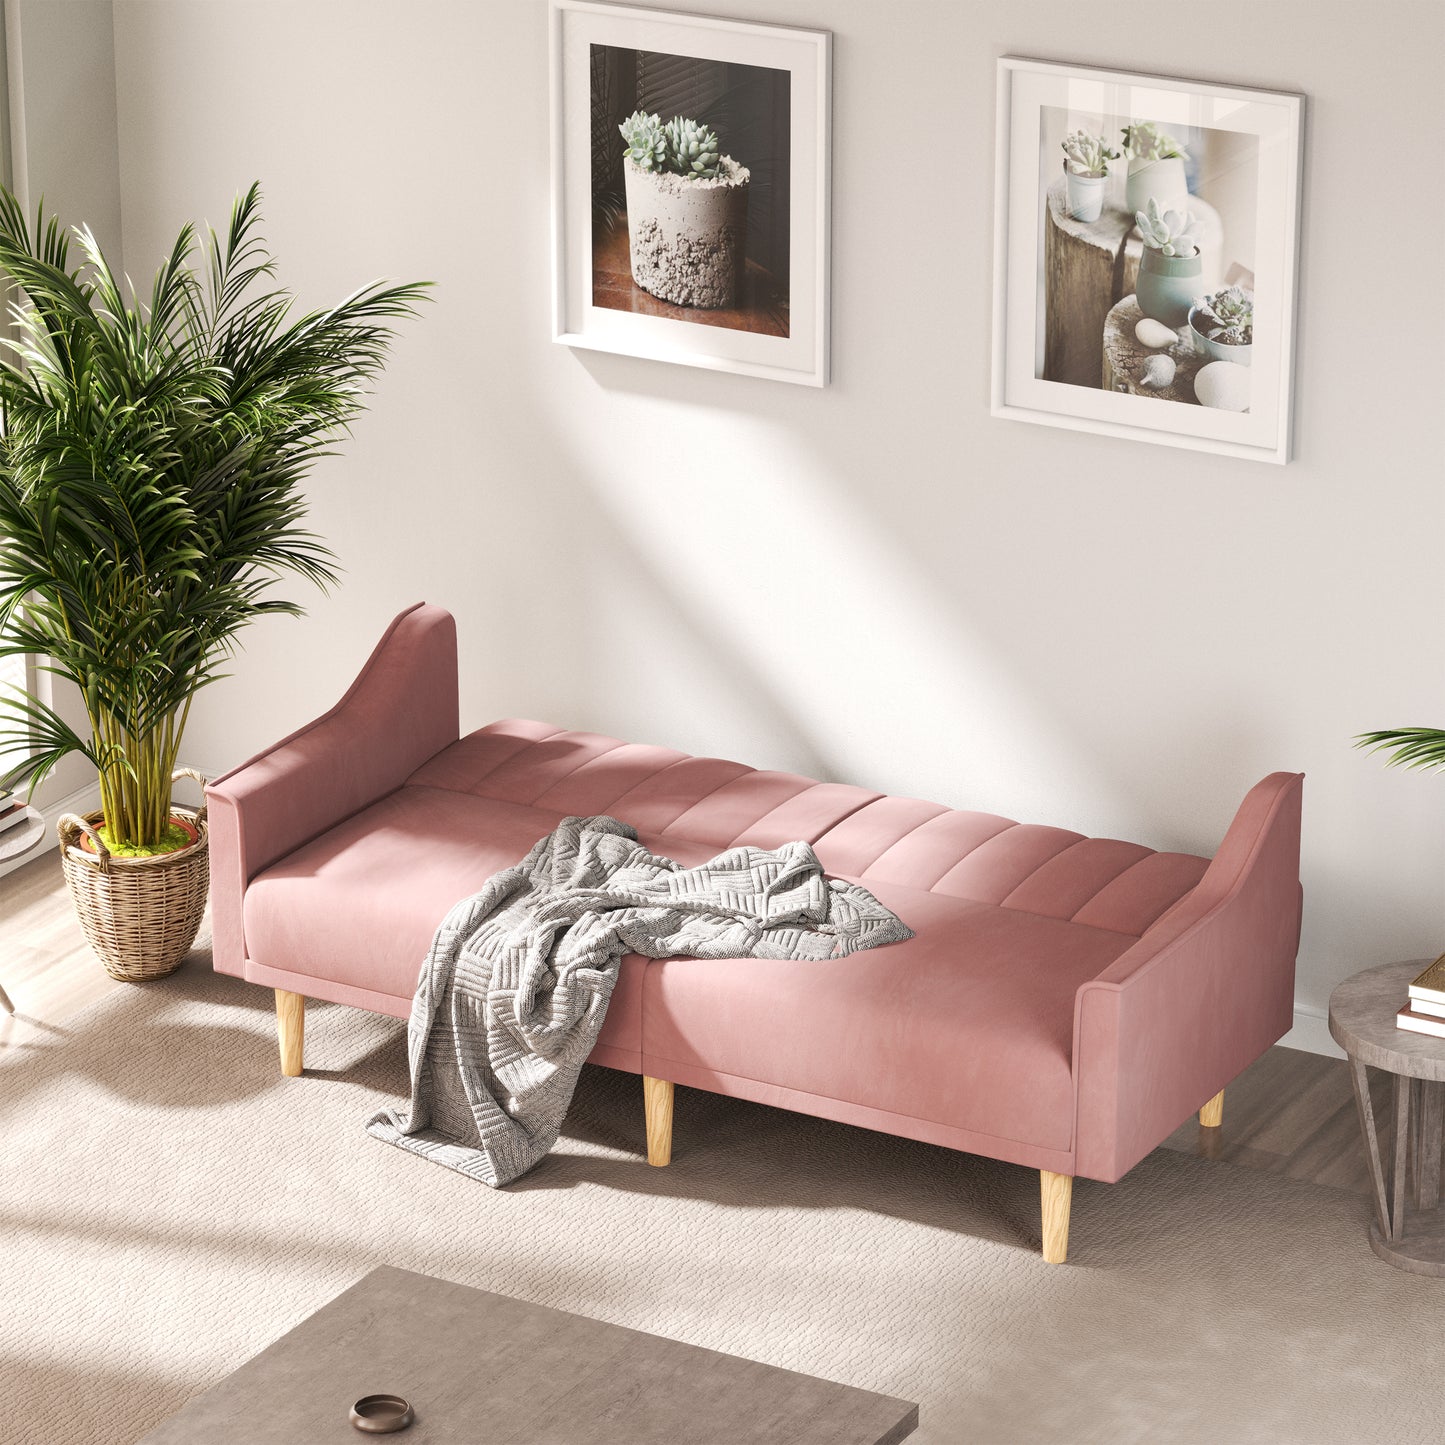 ACMEASE 74" Sofa Bed with Adjustable Backrest, Convertible Sleeper, Modern Recliner for Living Room, Bedroom, pink